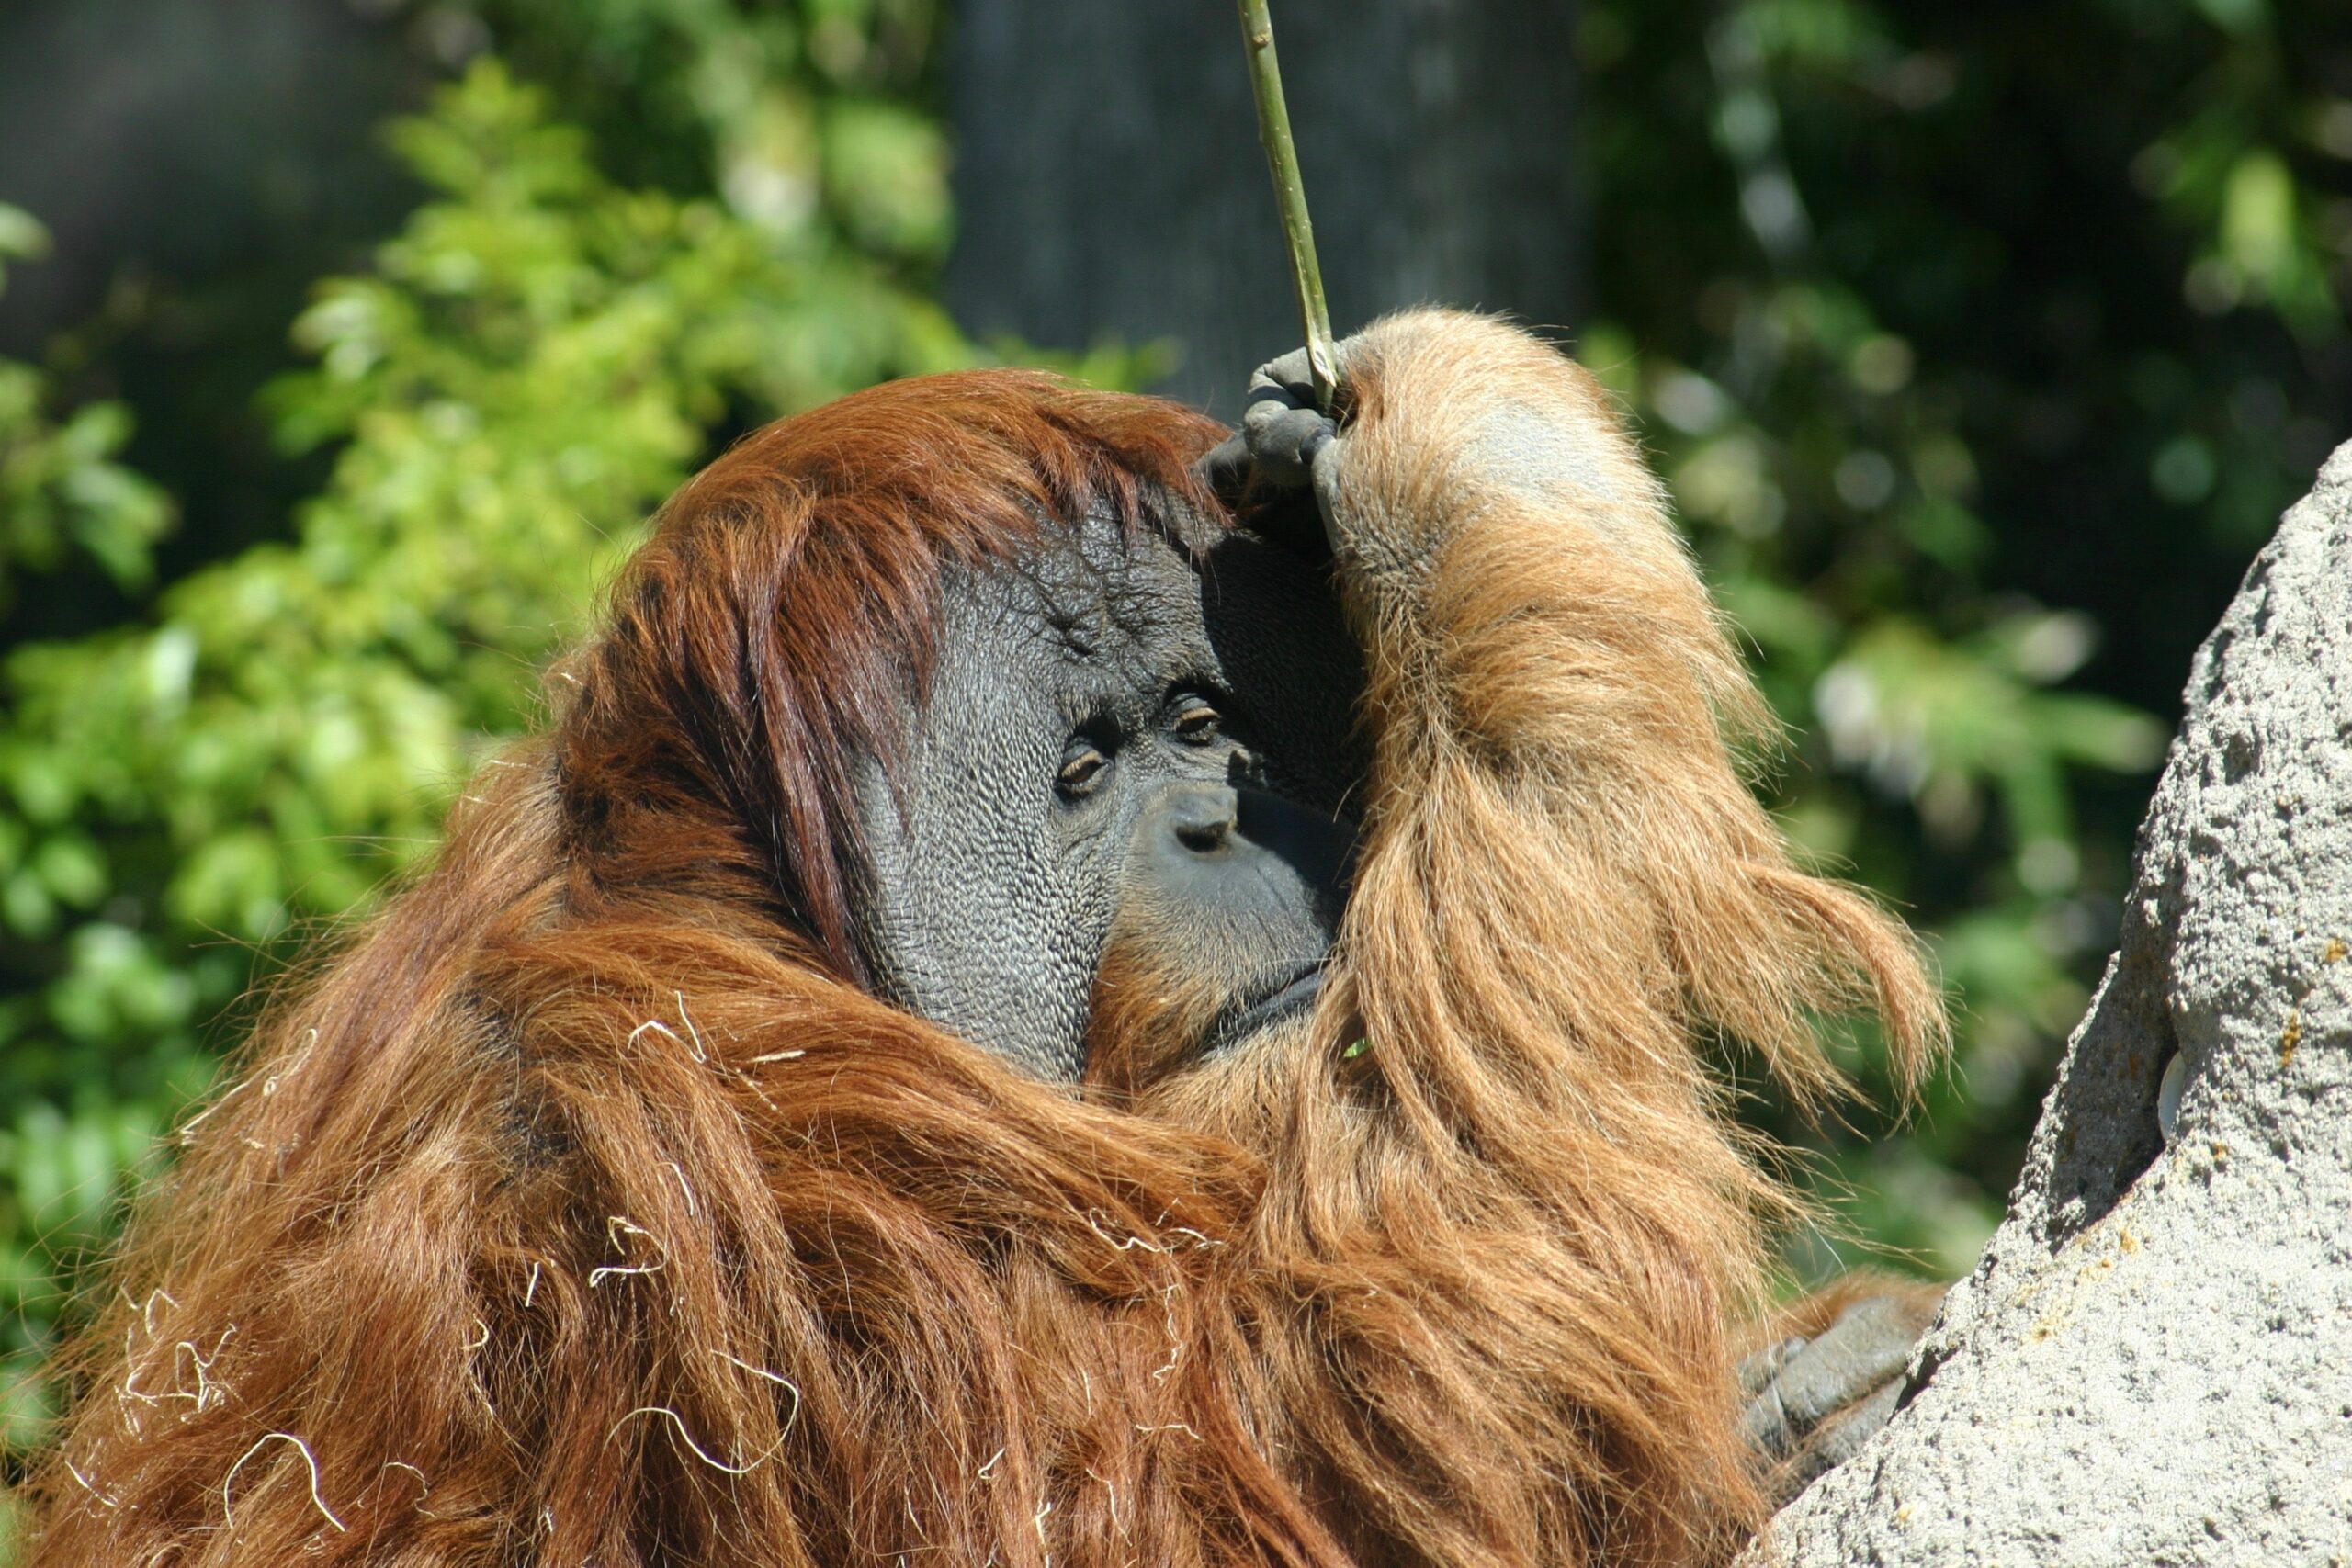 Aggressive deforestation is the primary threat to the Bornean orangutan.